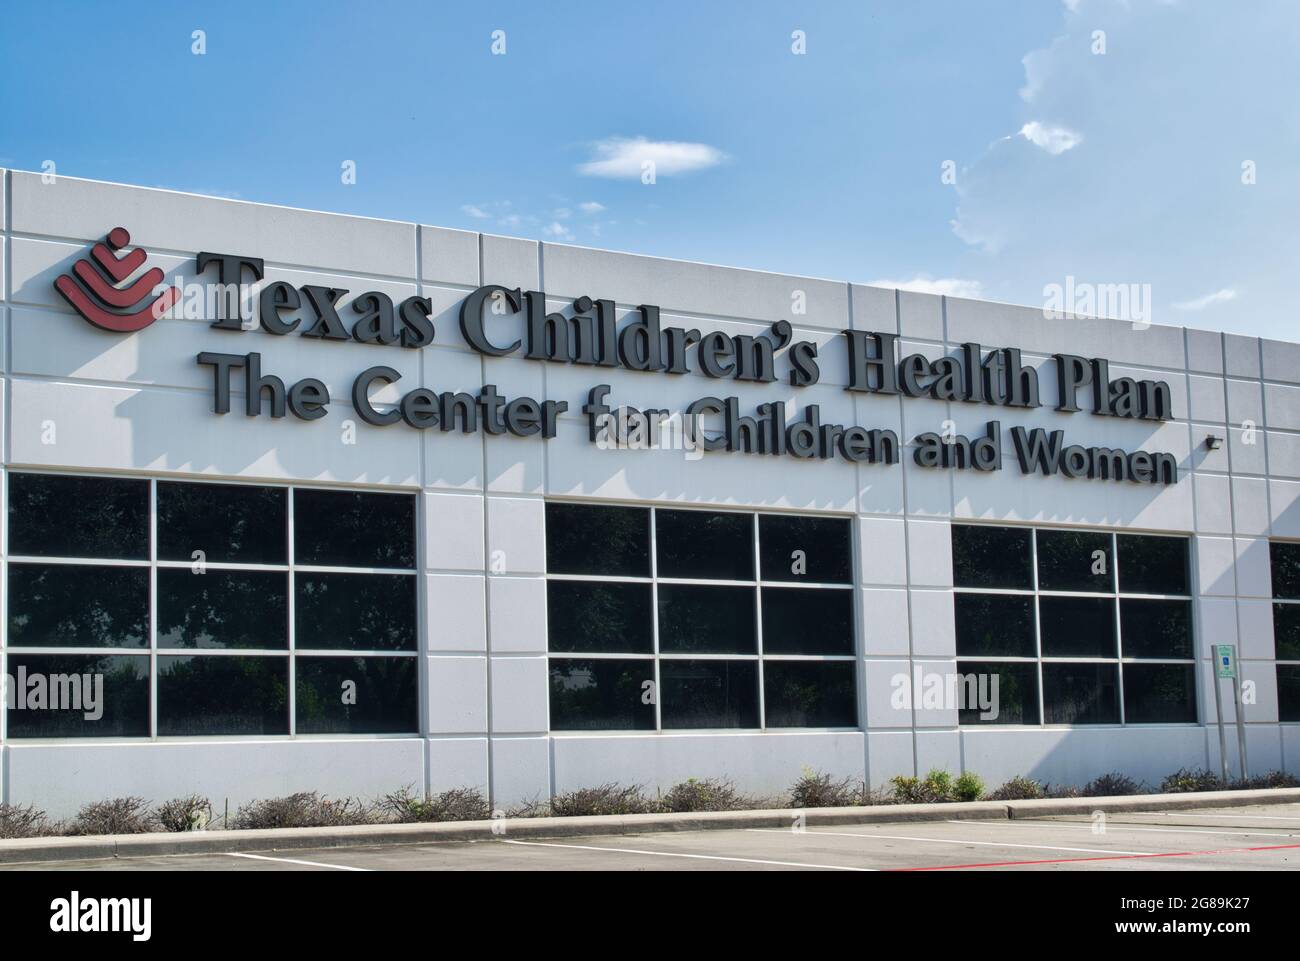 Cuentos infantiles: Houston